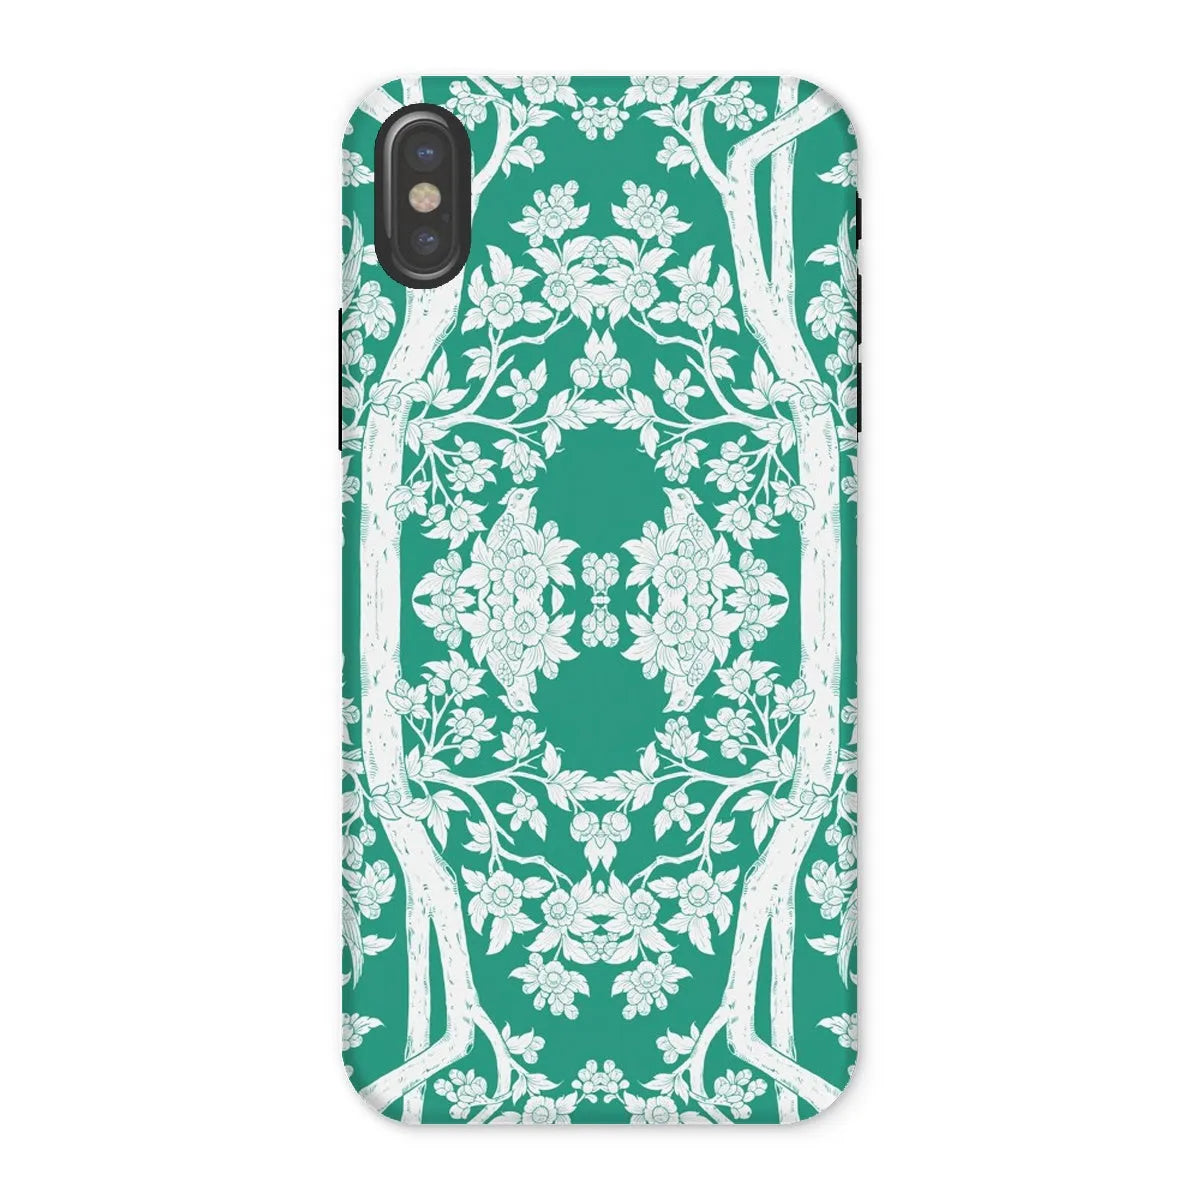 Aviary Green Aesthetic Pattern Art Phone Case - Iphone x / Matte - Mobile Phone Cases - Aesthetic Art